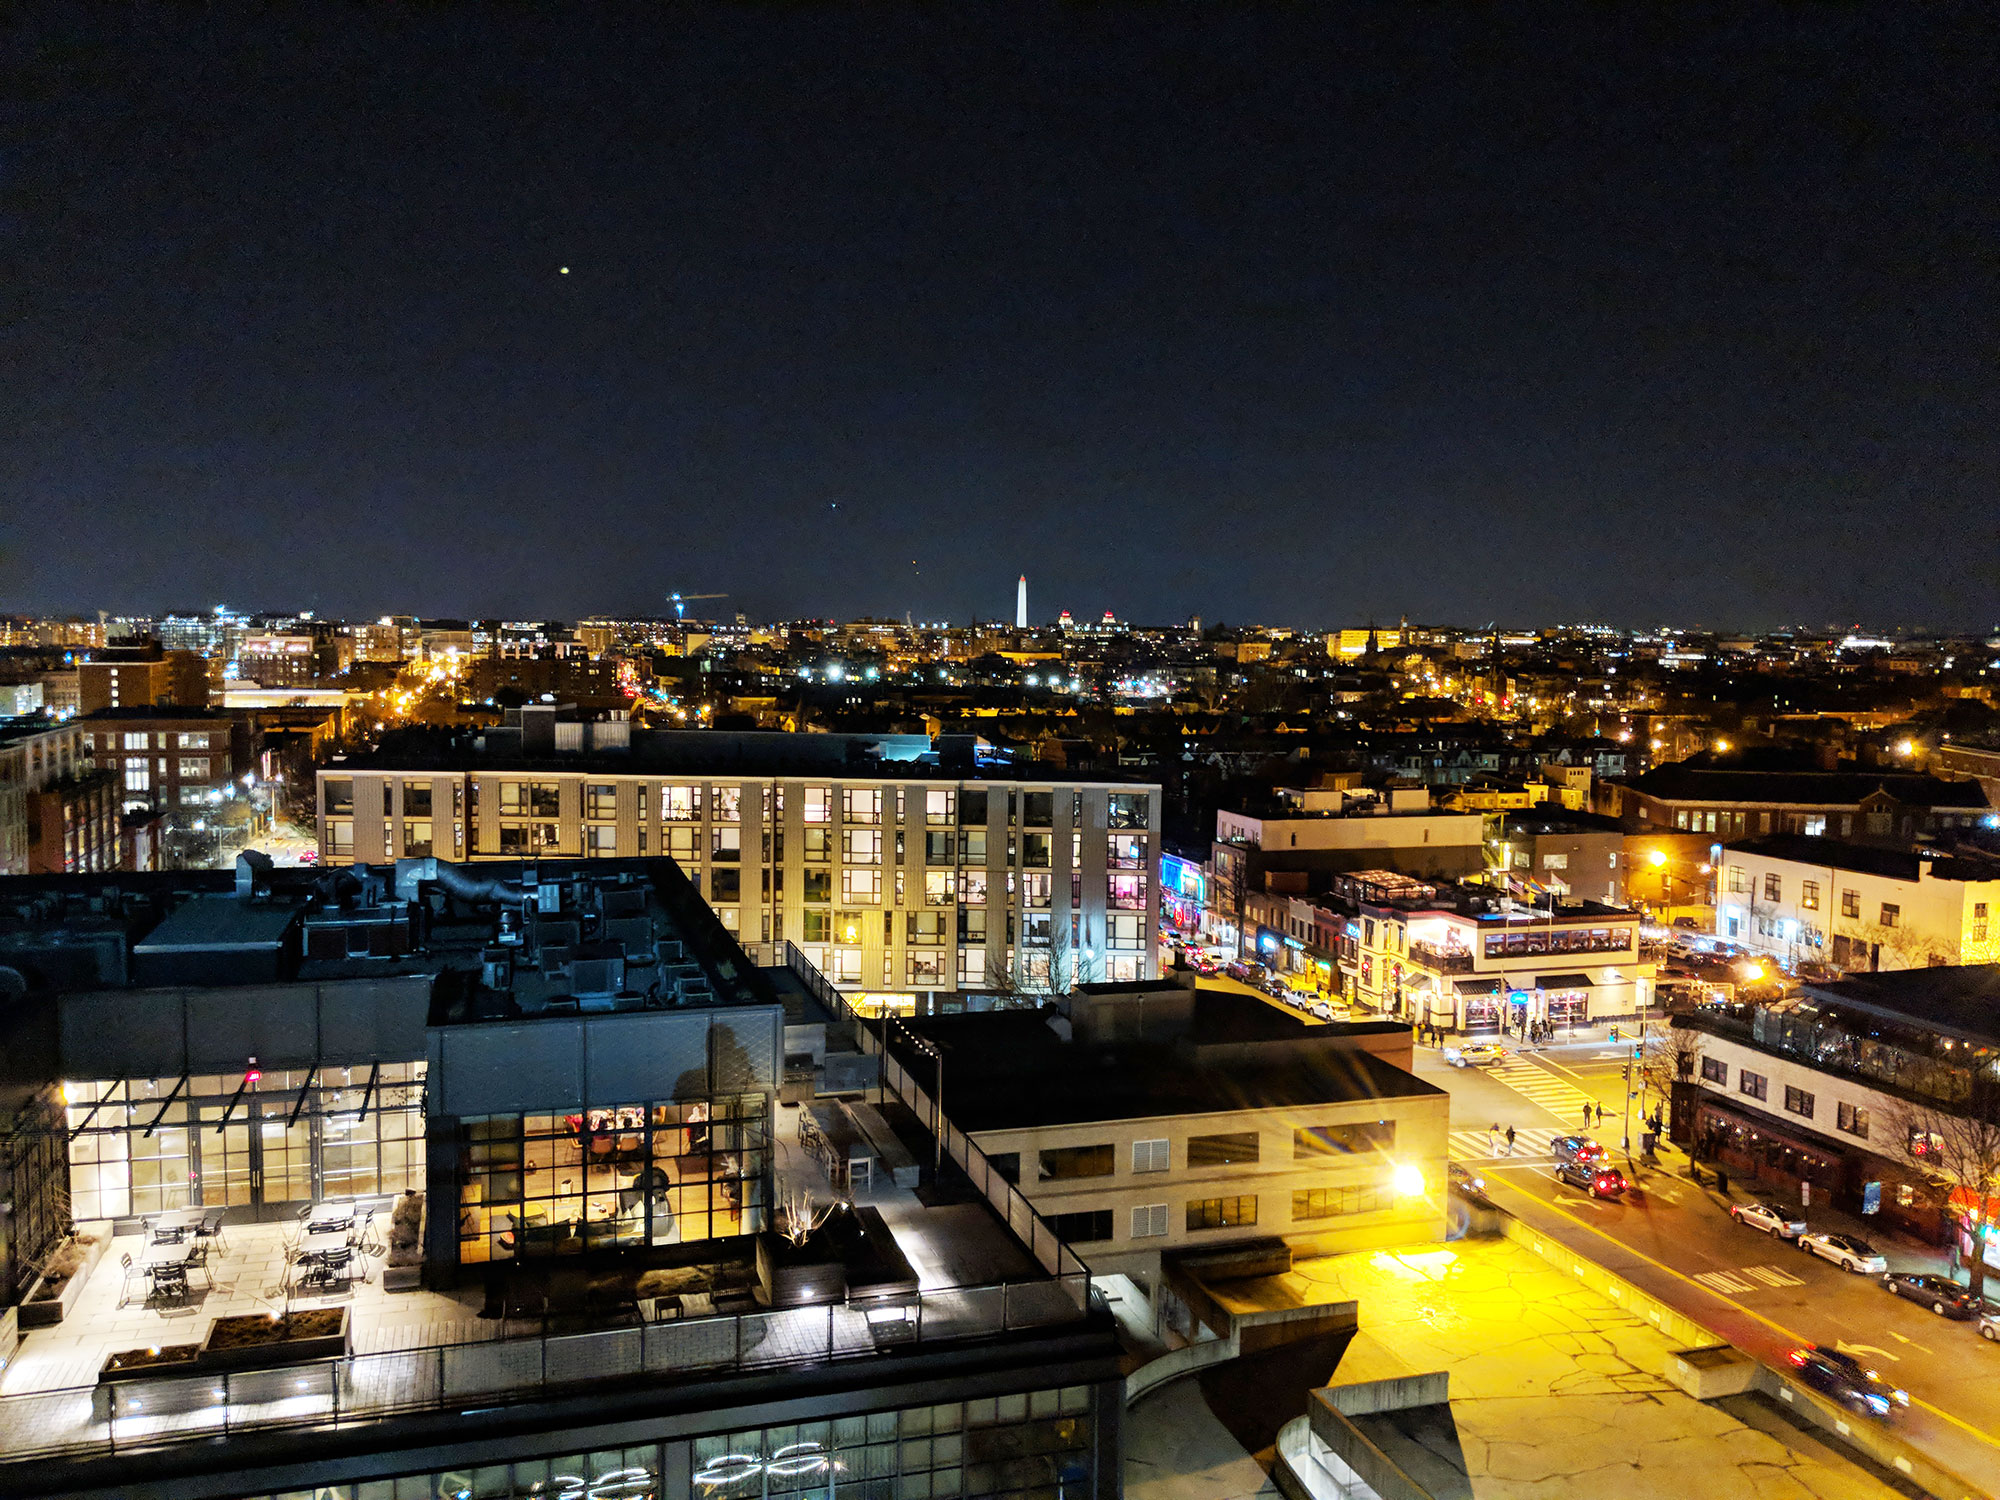 Washington DC at night from the SHAW Neighborhood.